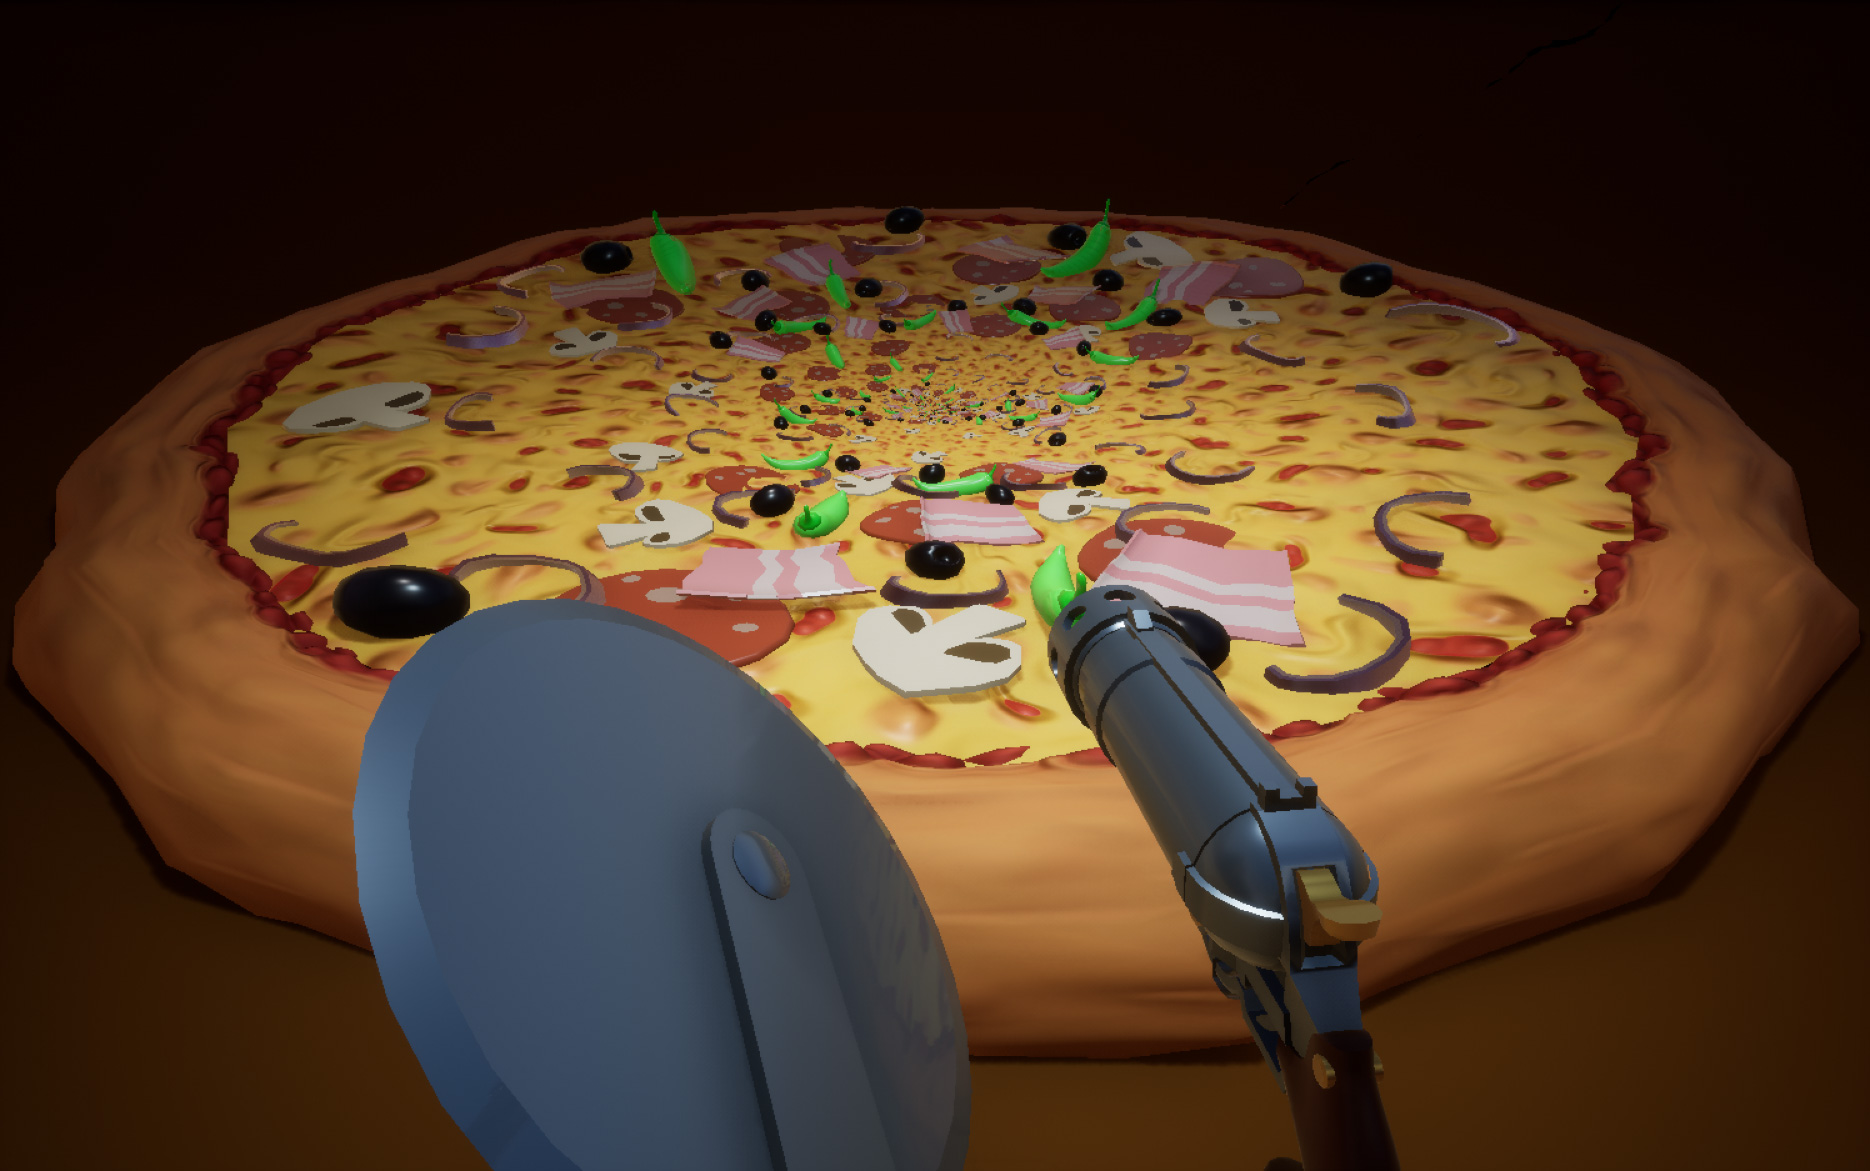 infinite pizza